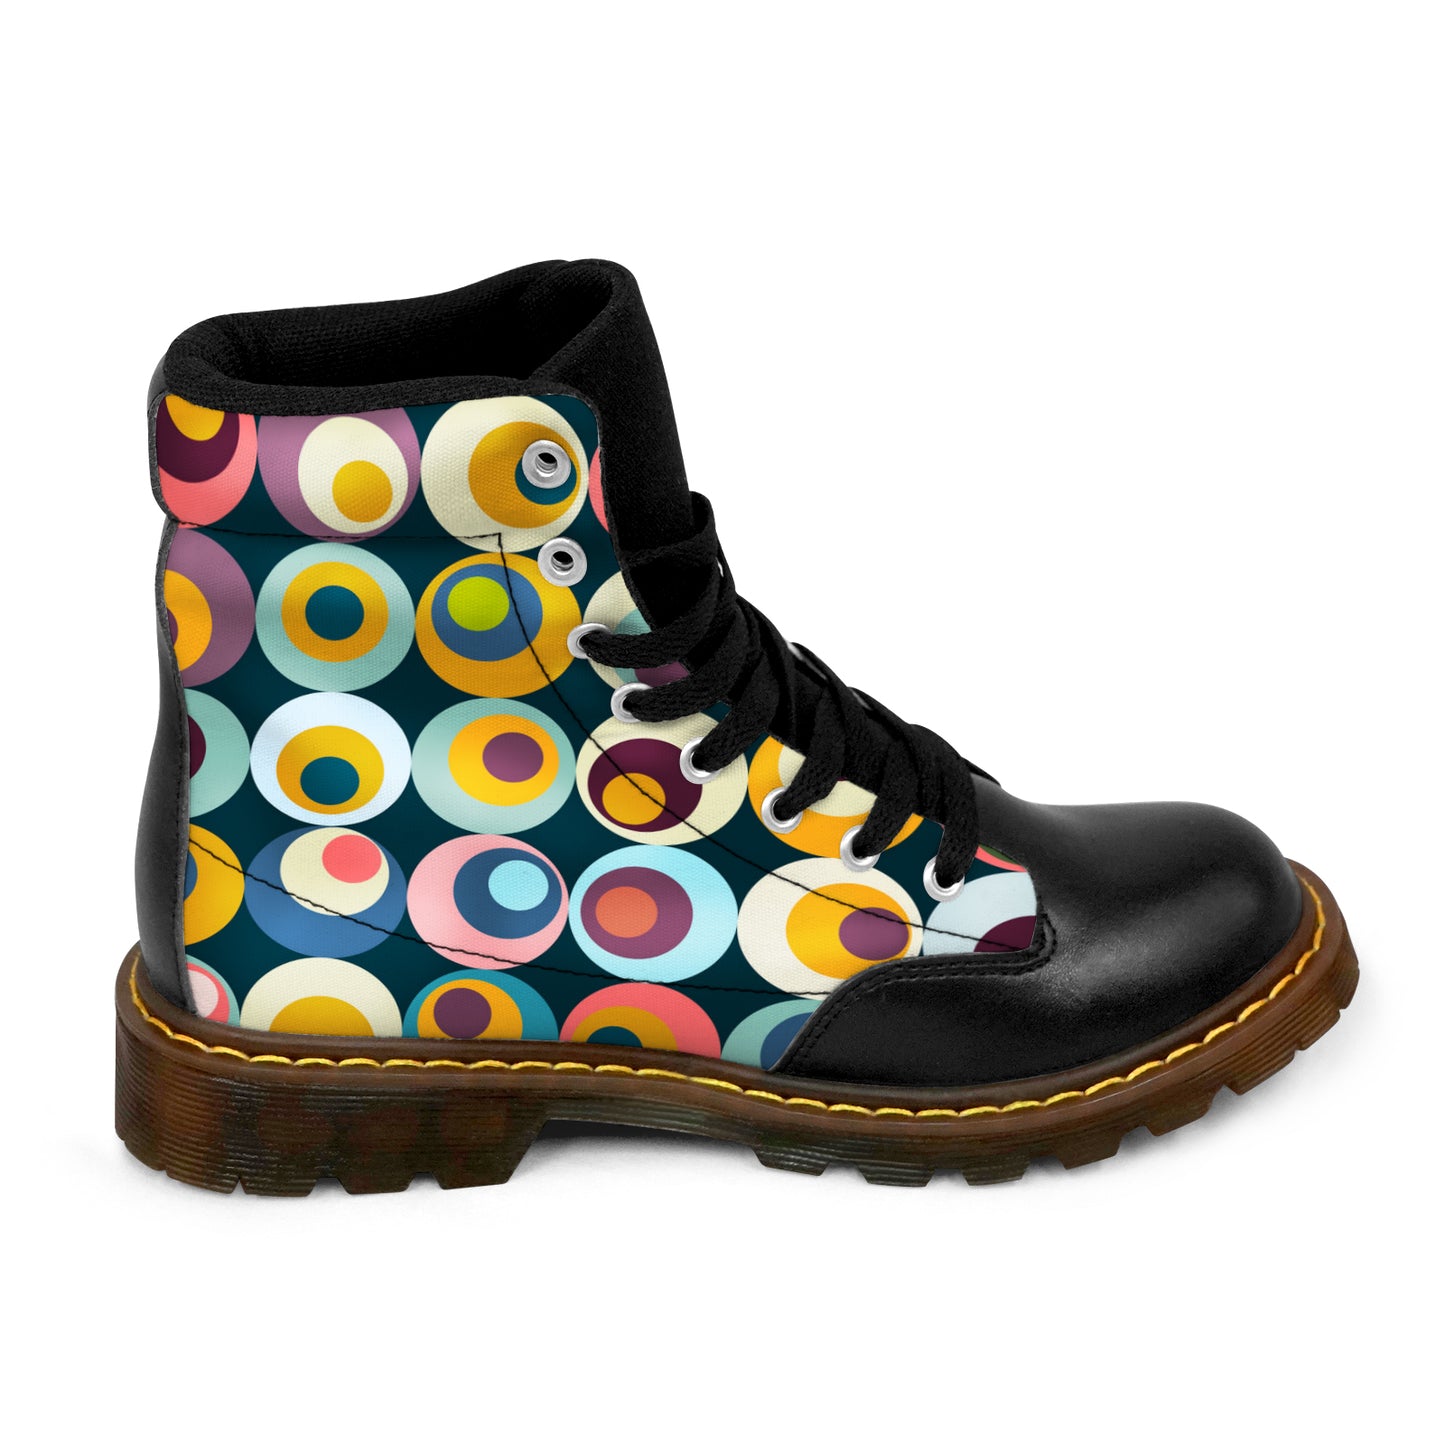 Winter Round Toe Women's Boots - Retro Circles